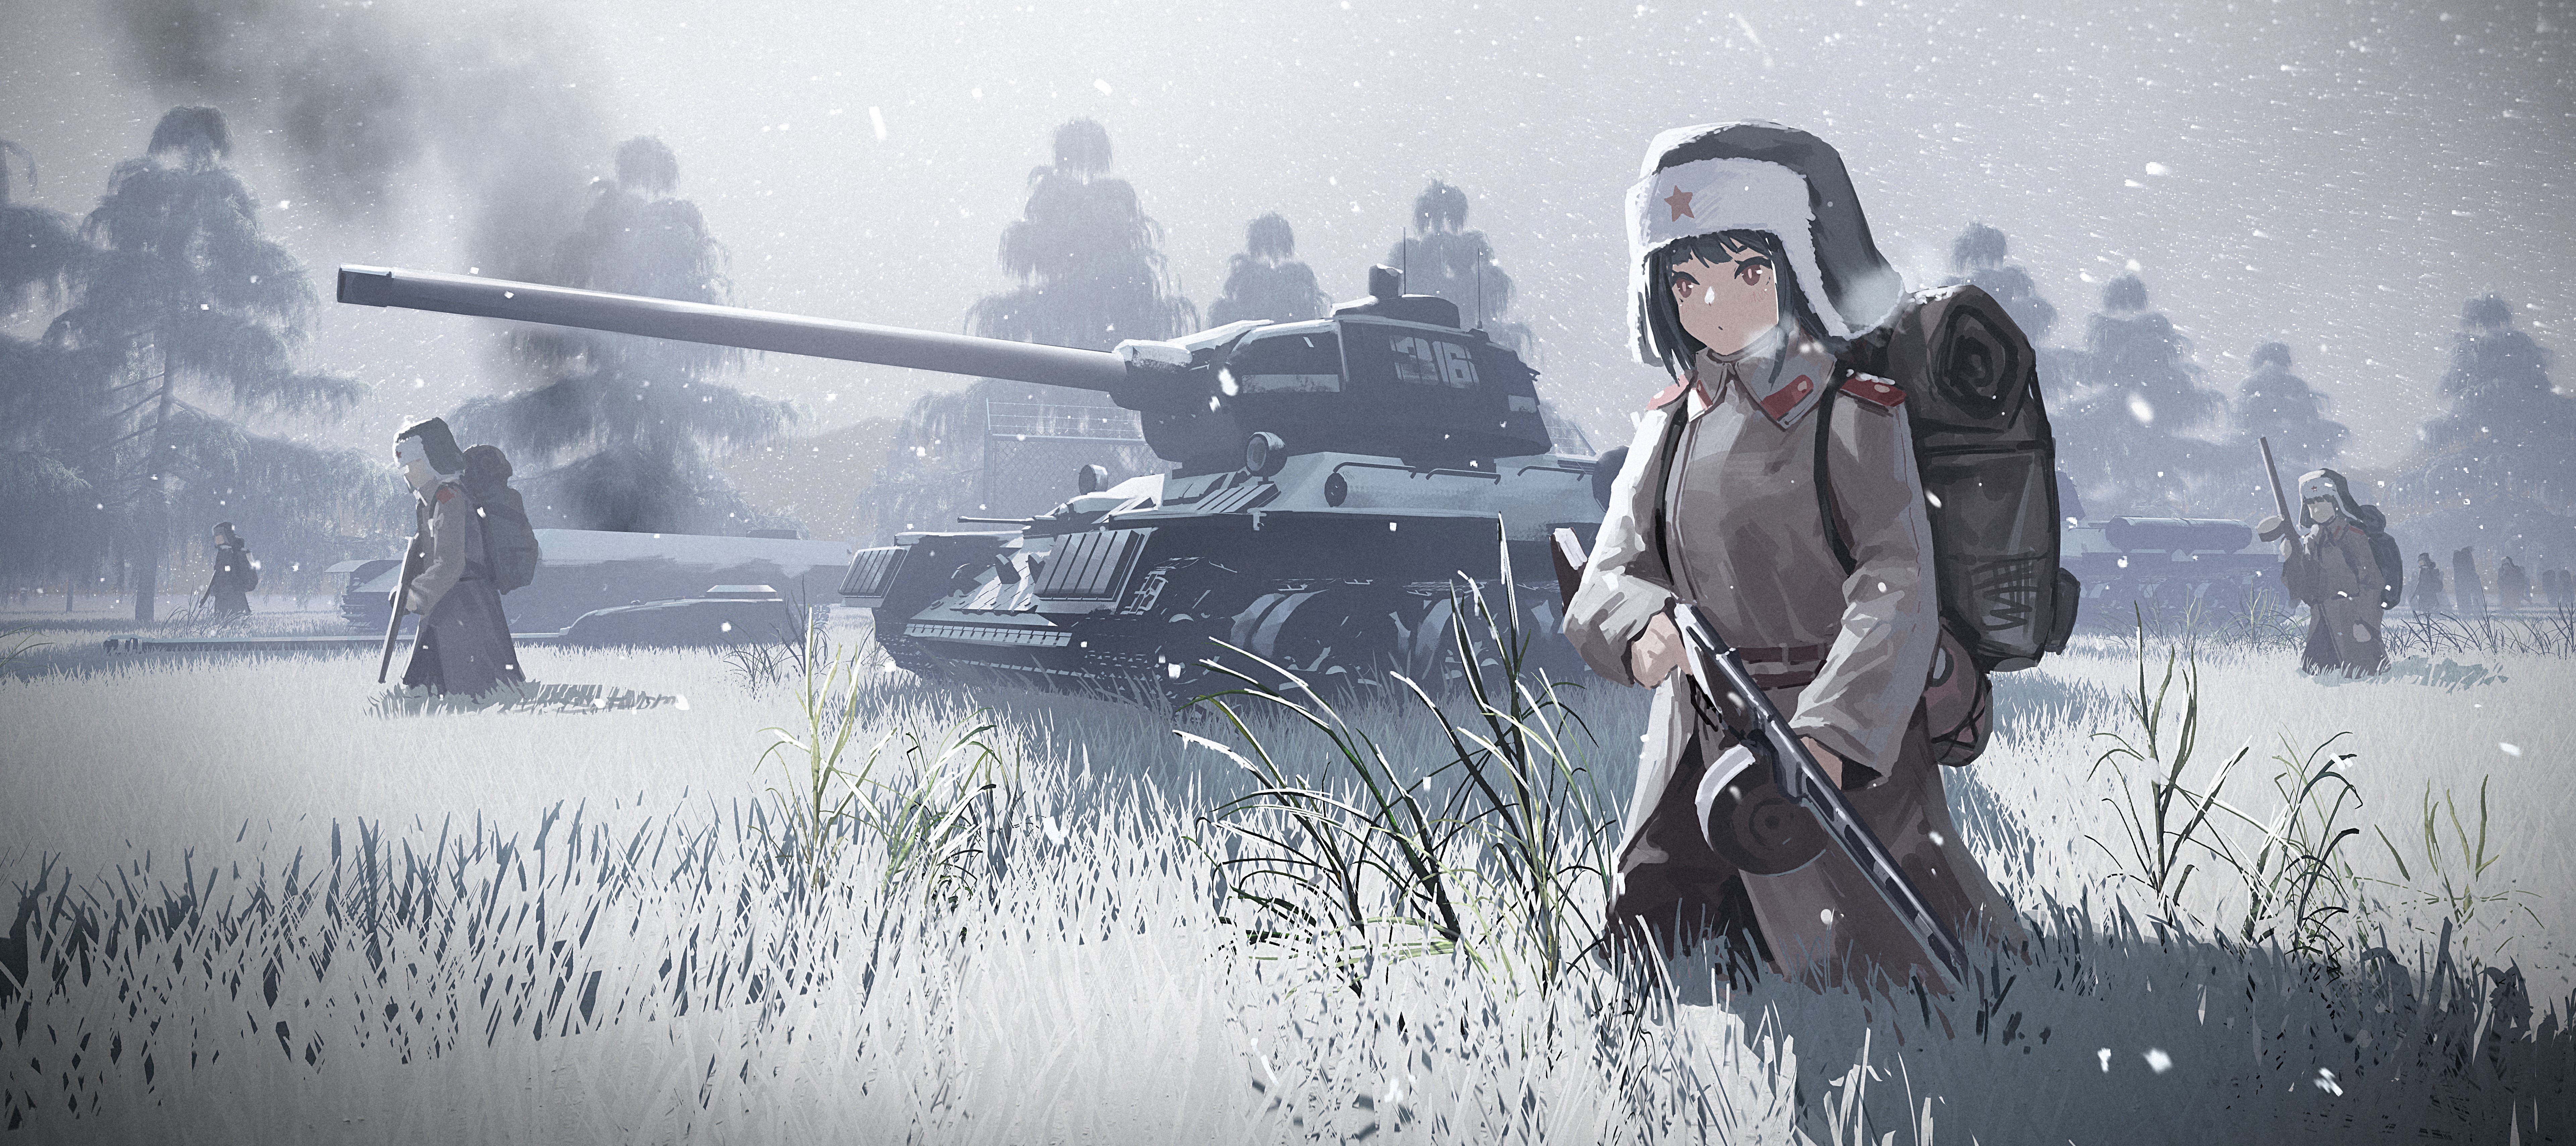 Anime 7680x3417 anime anime girls original characters artwork Doitsu no Kagaku snow tank T-34 PPSh-41 submachine gun uniform Soviet Army ushanka backpacks World War II